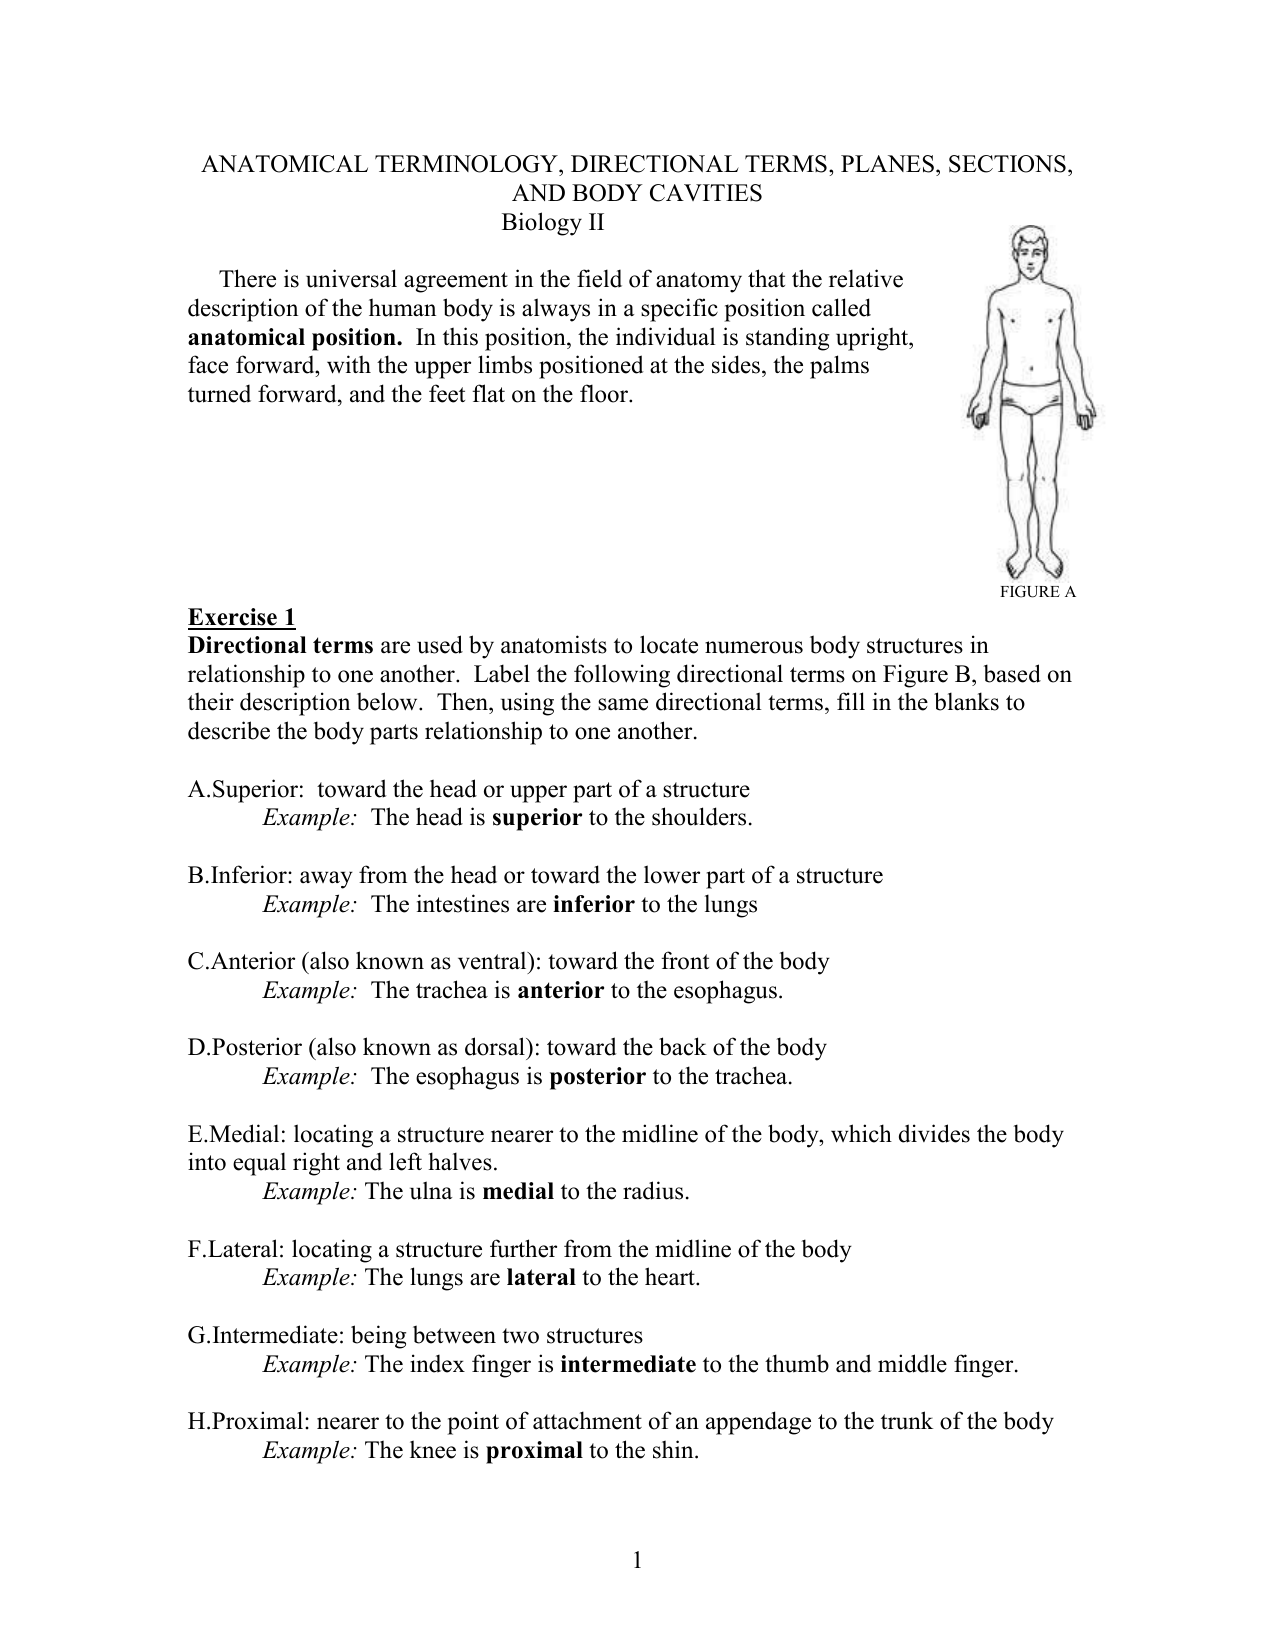 Anatomical orientation essay